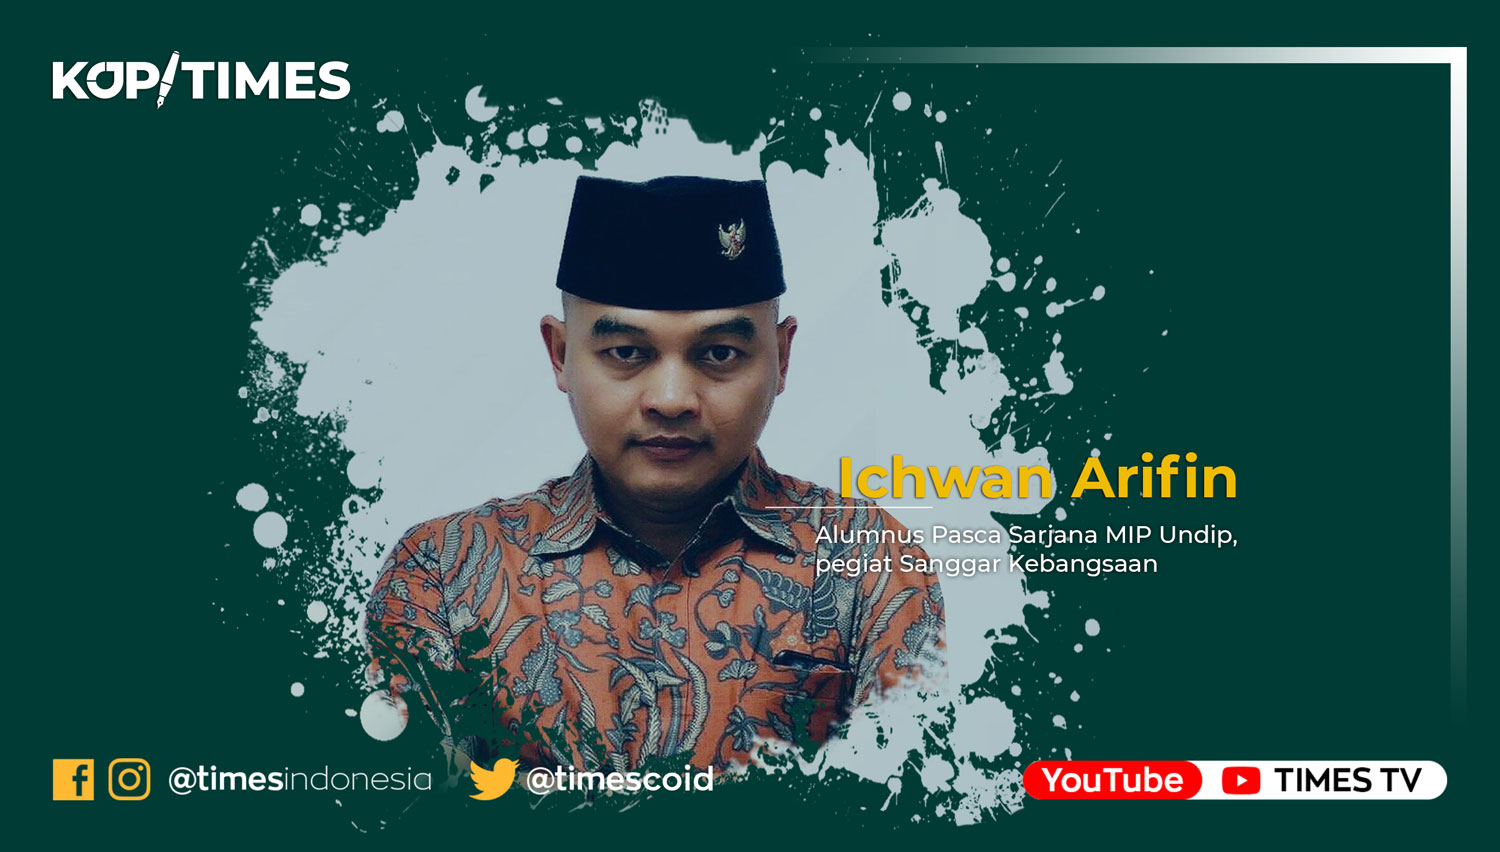 Ichwan Arifin adalah Alumnus Pasca Sarjana MIP Undip, pegiat Sanggar Kebangsaan (Grafis: TIMES Indonesia)